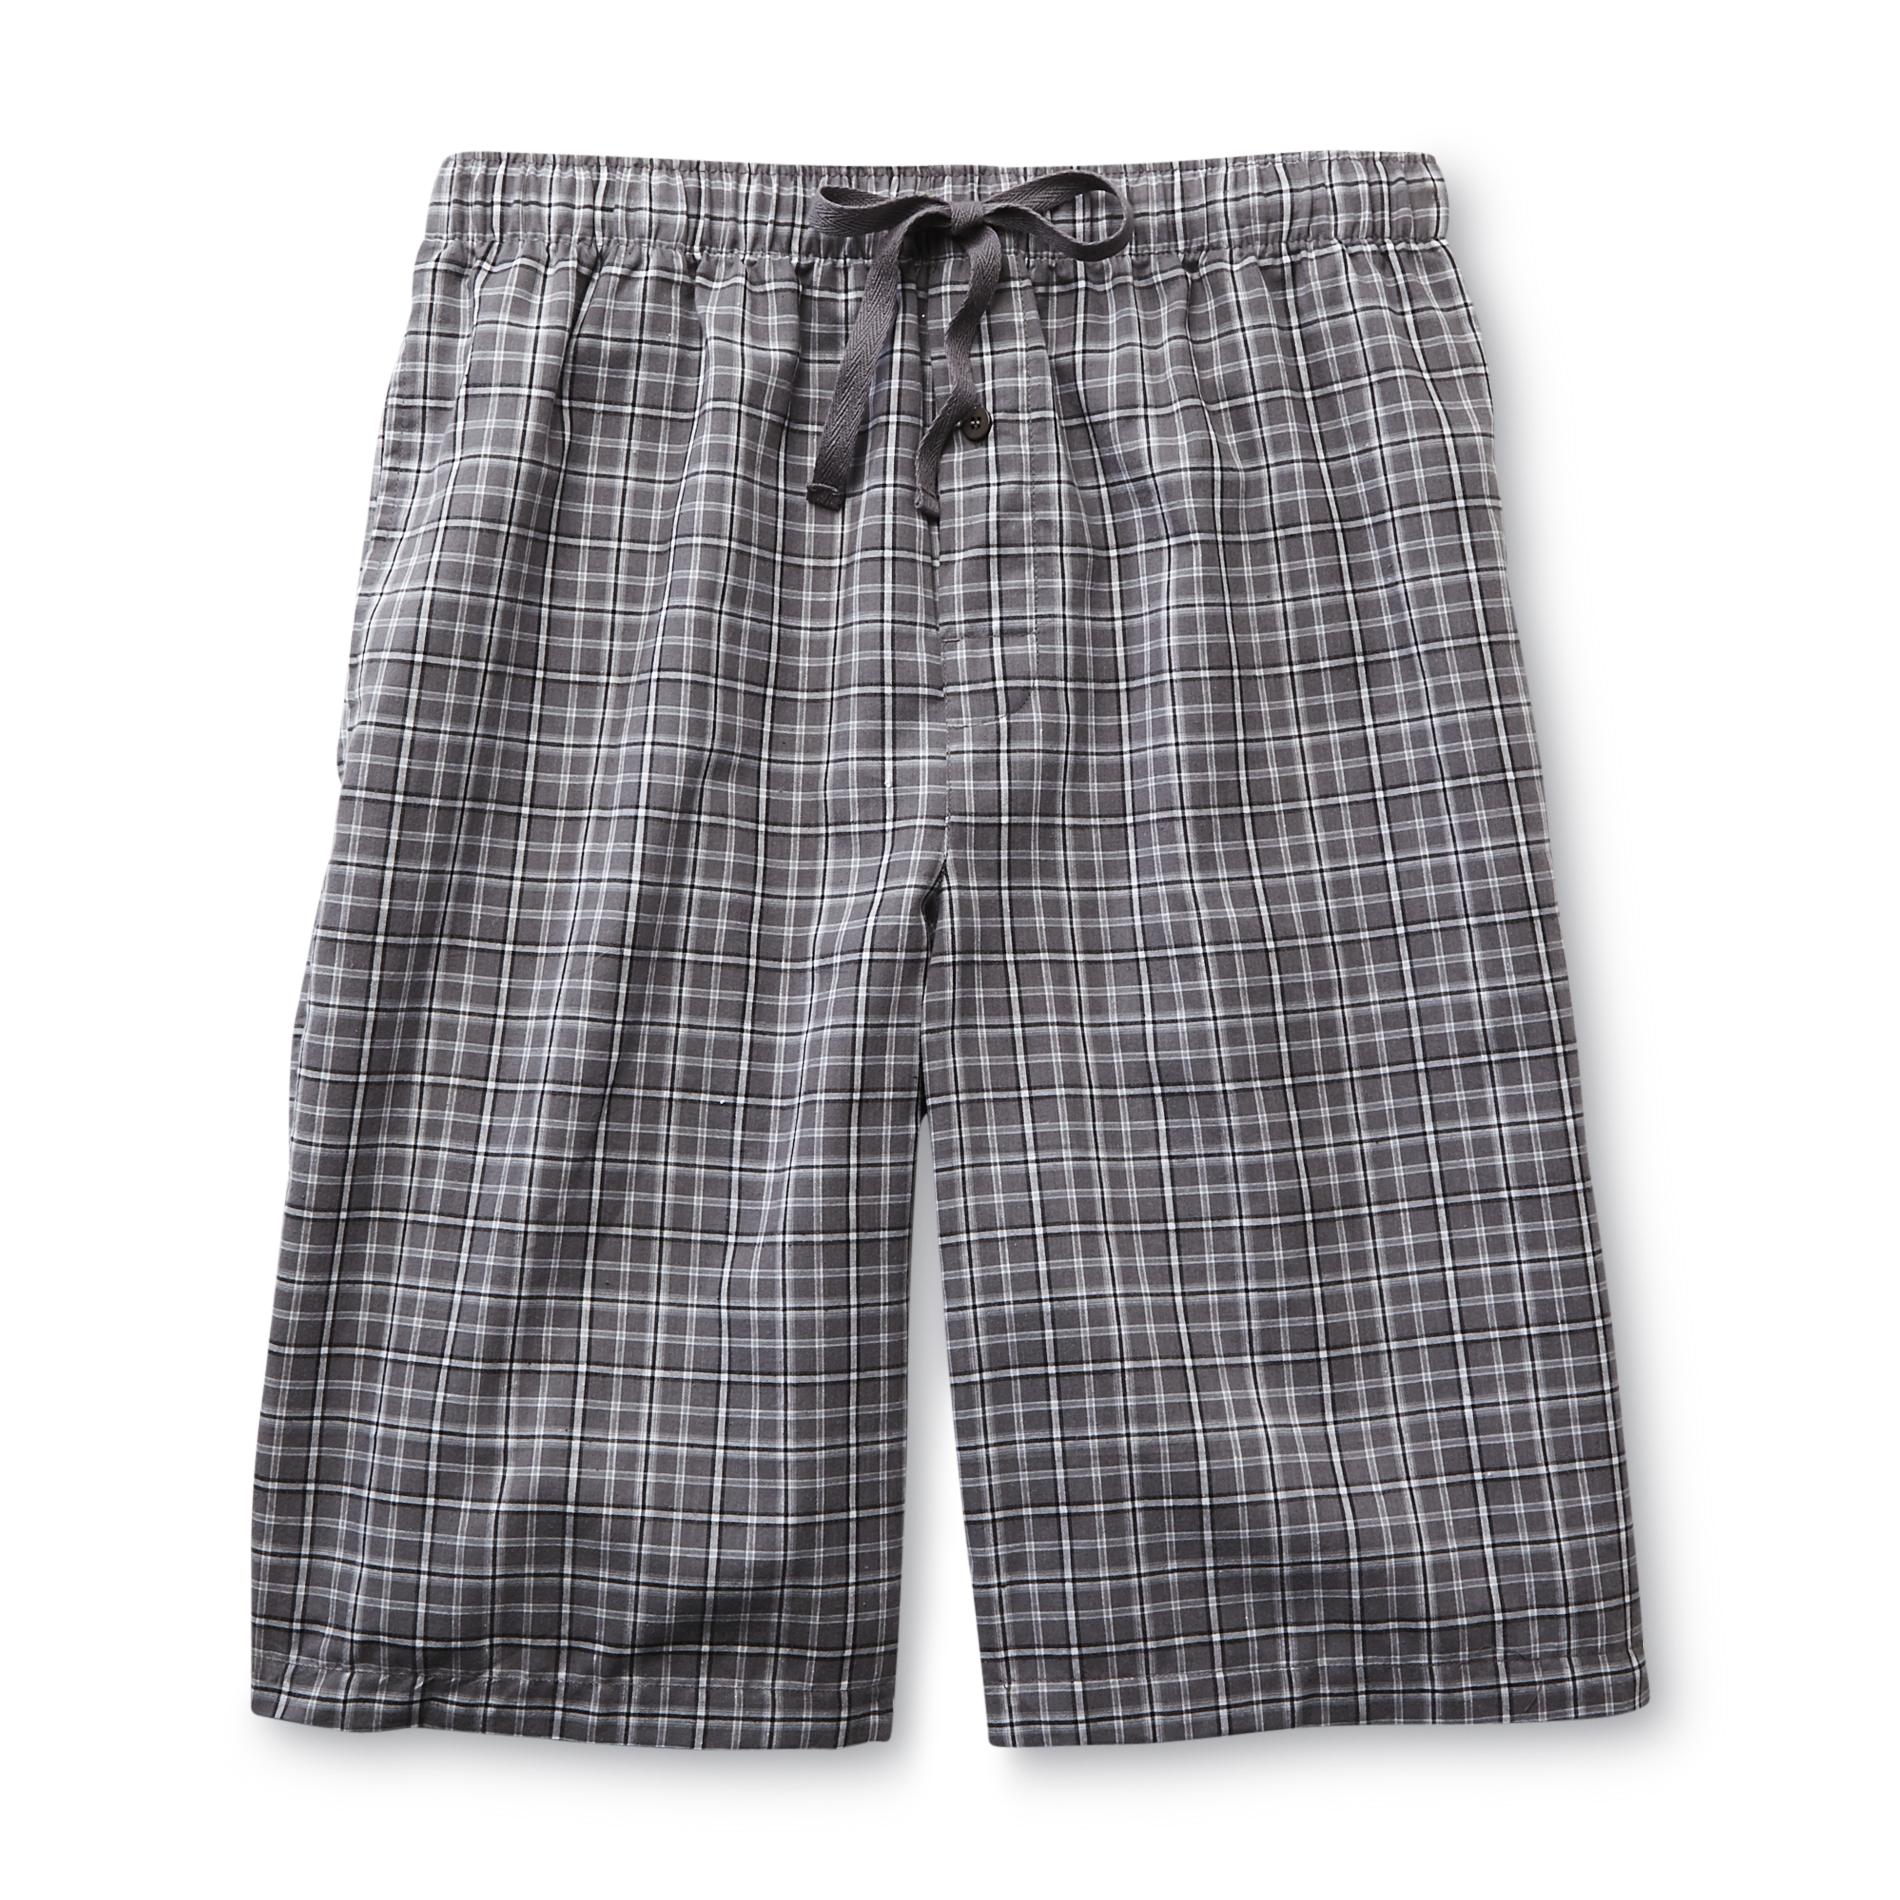 Basic Editions Men's Big & Tall Pajama Shorts - Plaid